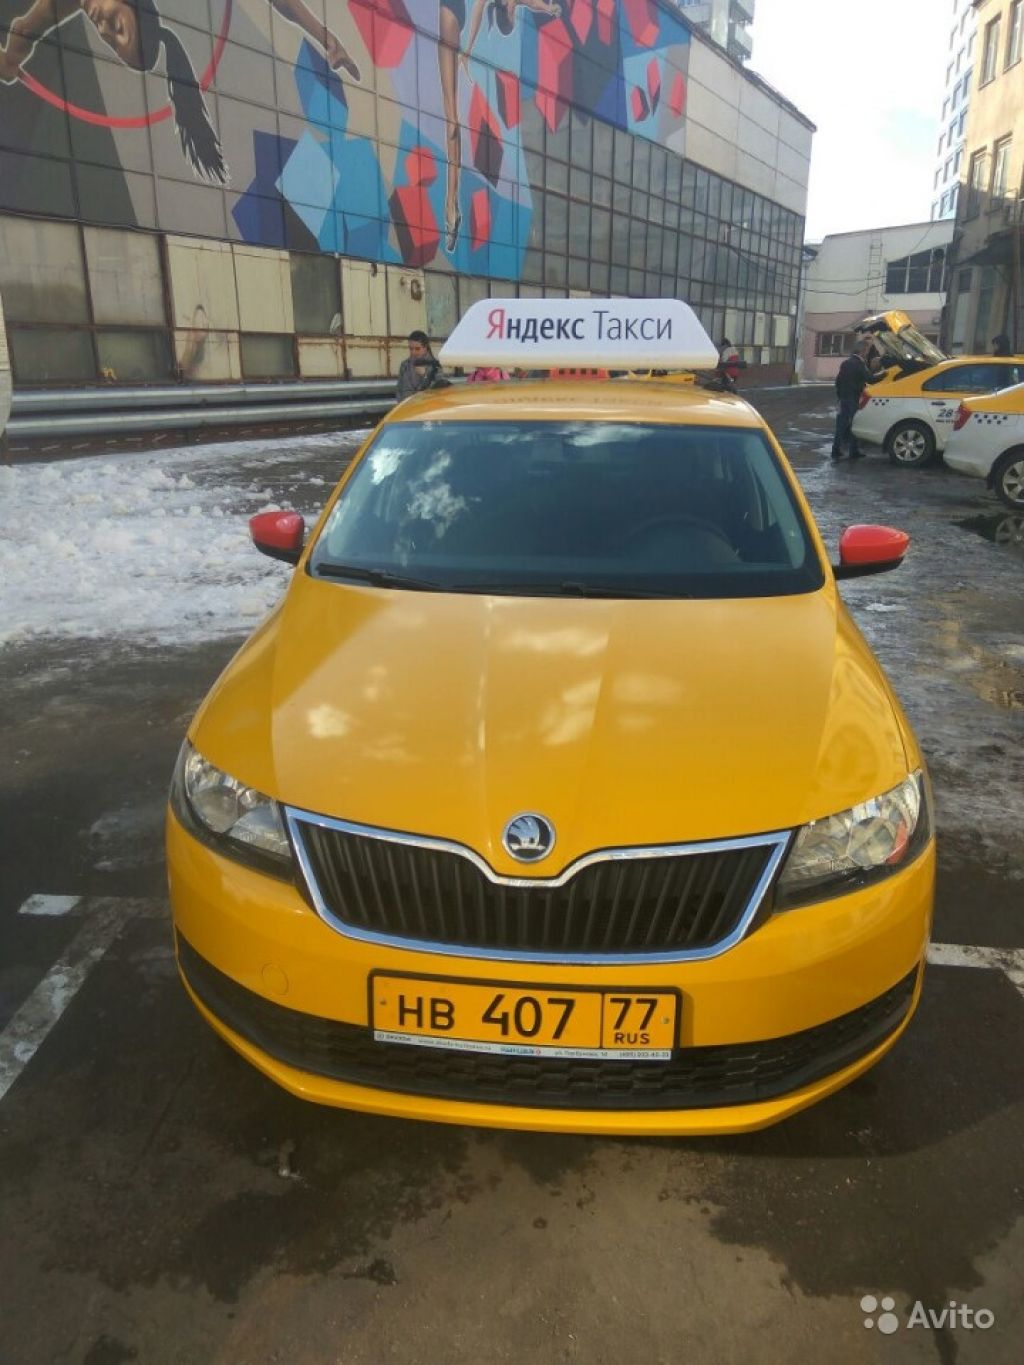 Работа в такси в Москве. Фото 1